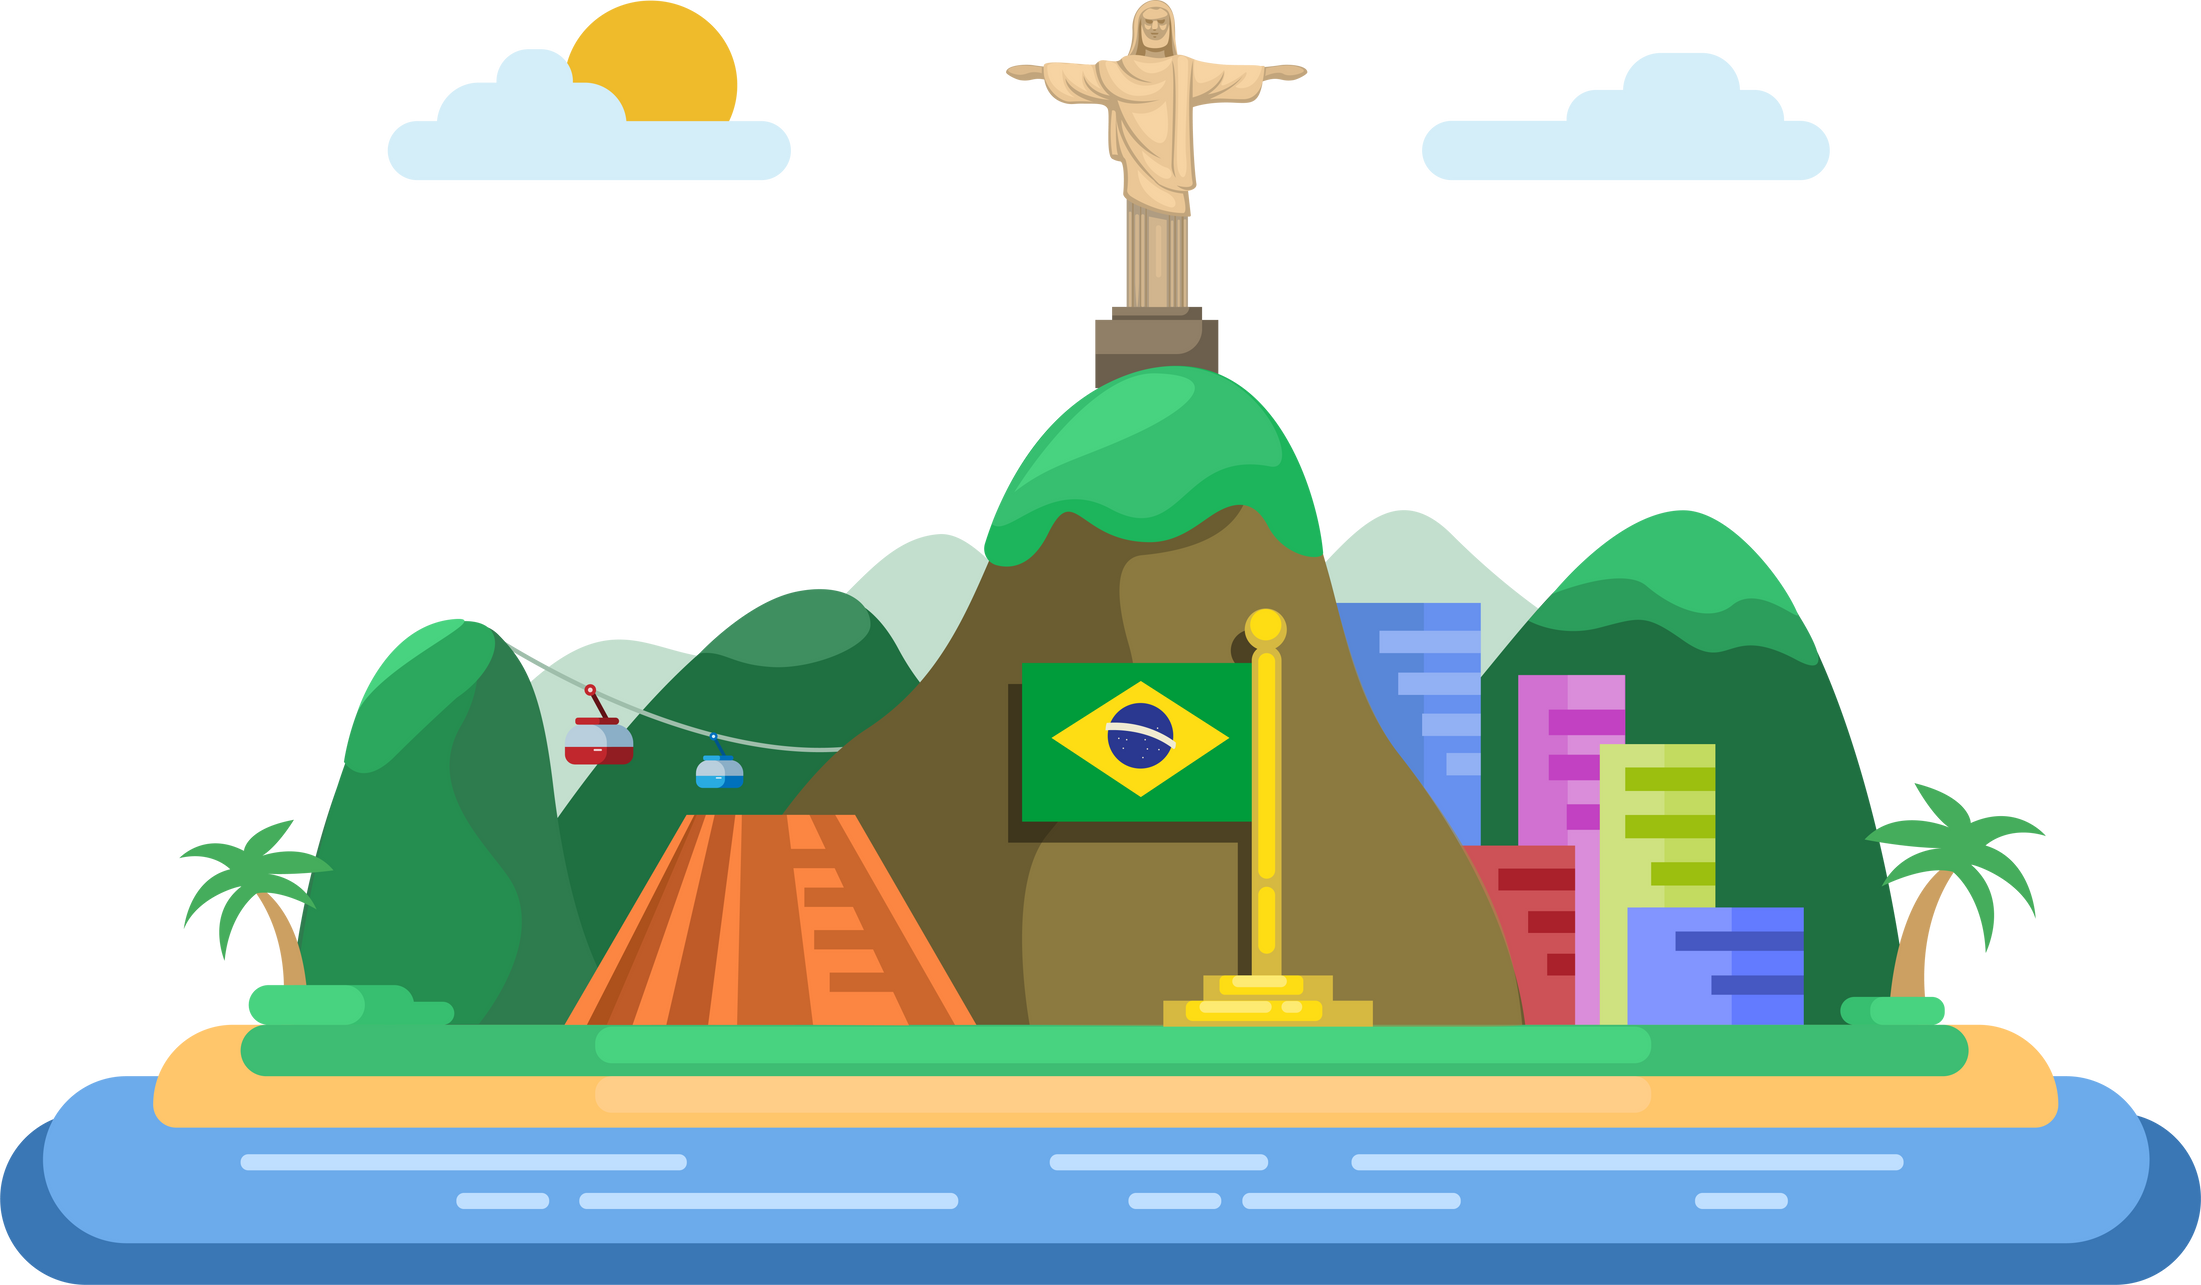 Rio De Janeiro Brazil iconic landmark scene illustration